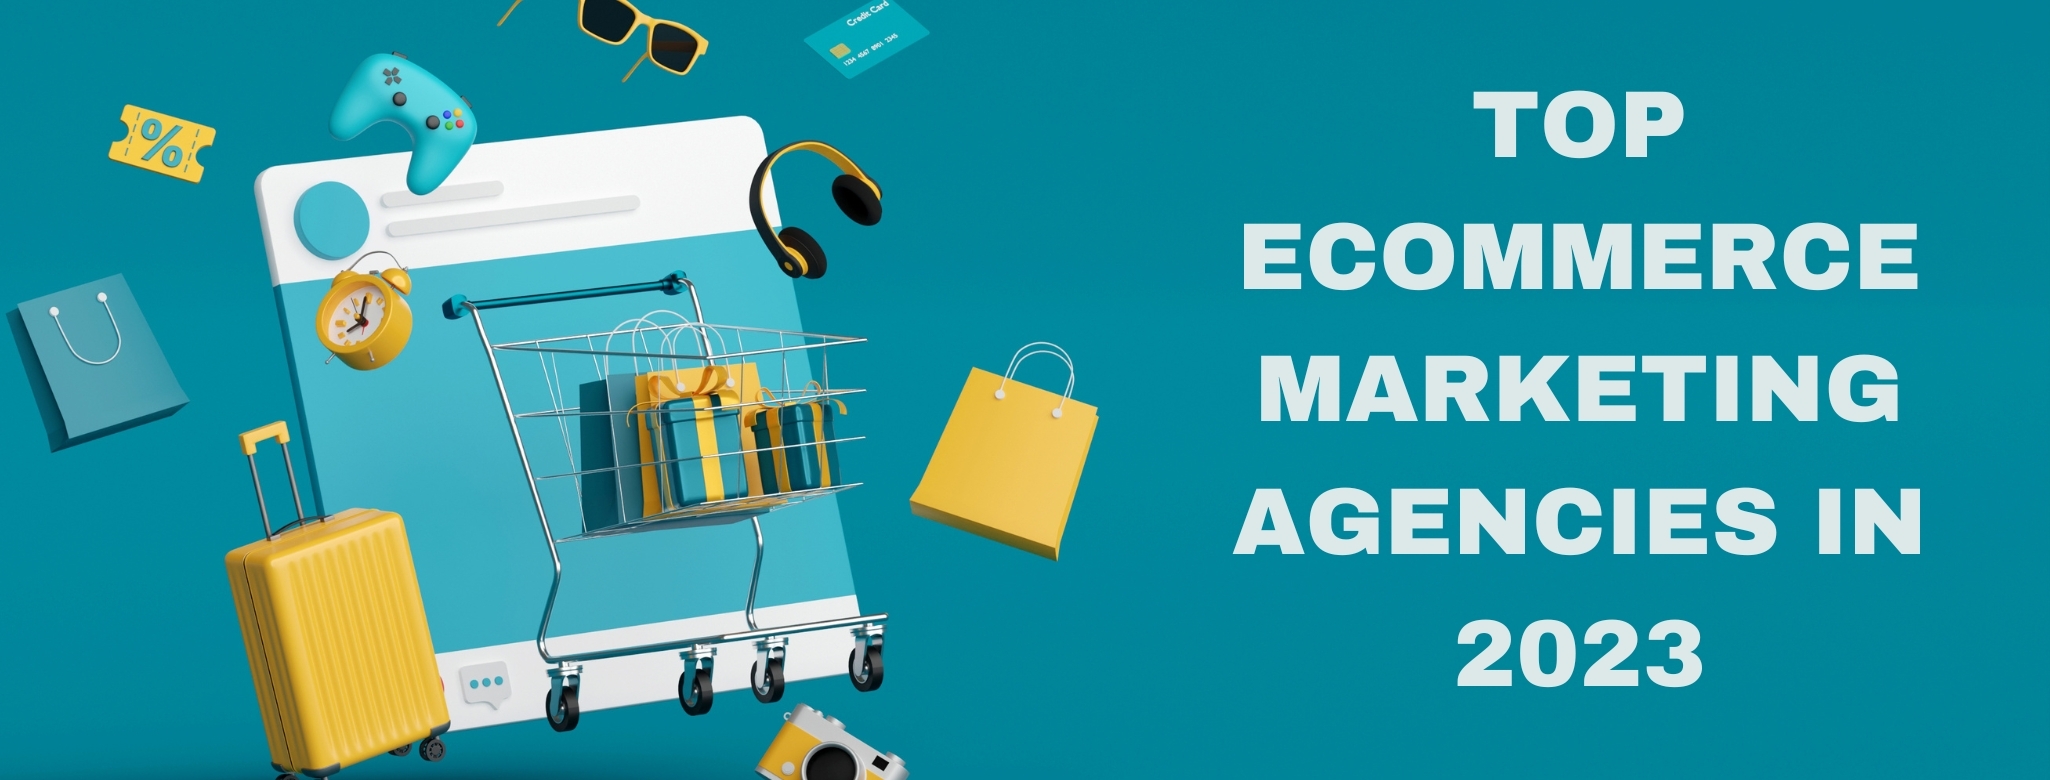 ecommerce marketing agencies